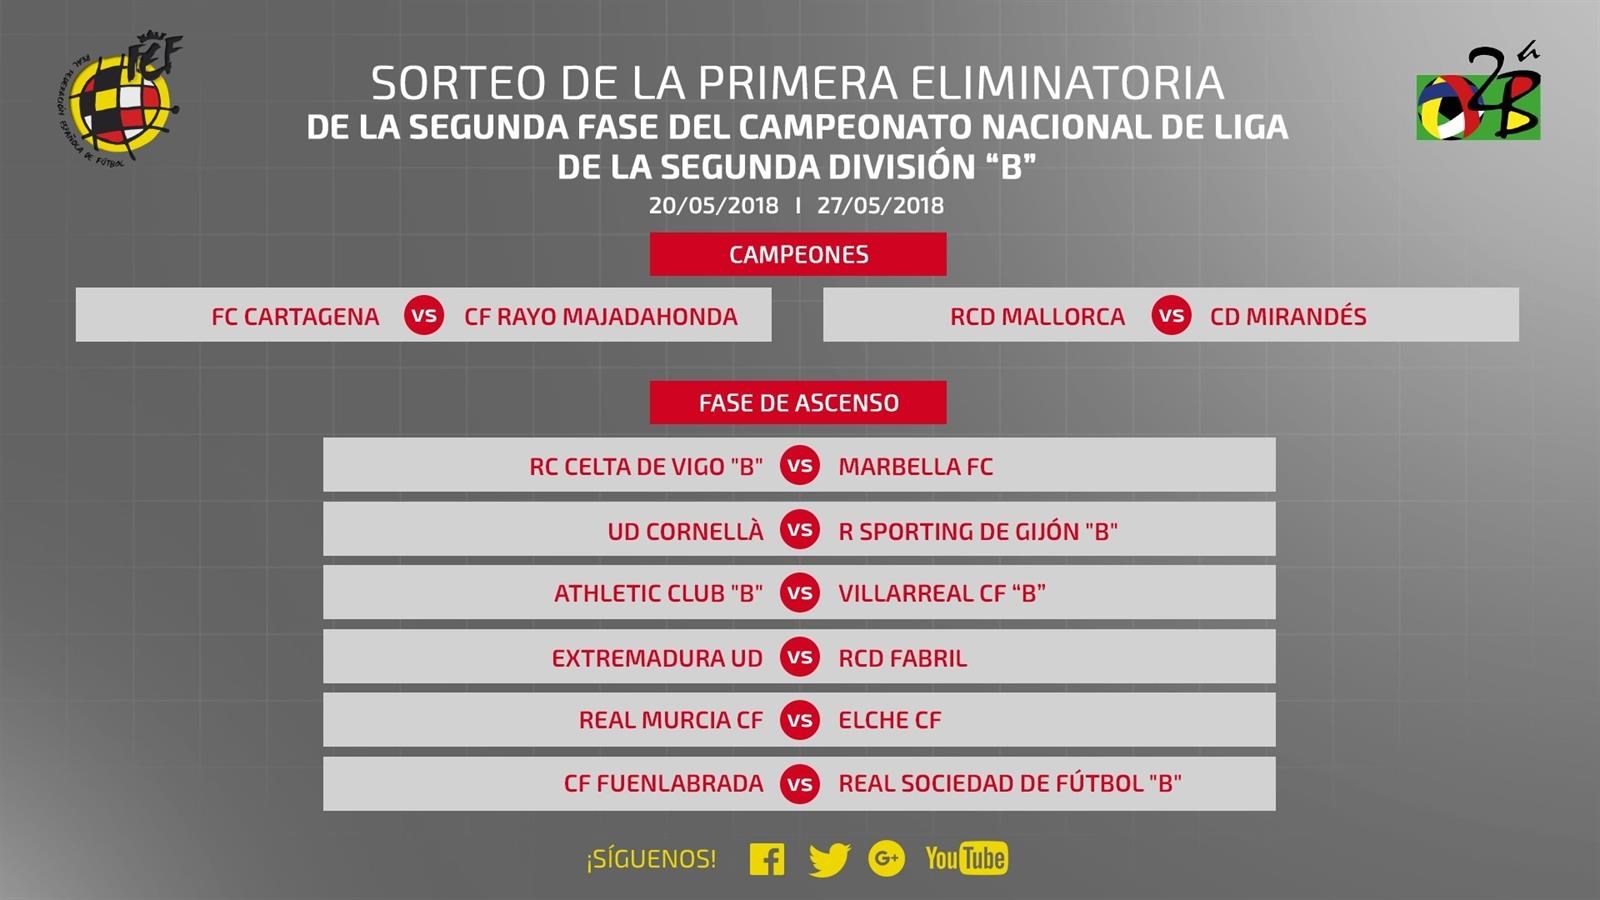 Cartagena-Majadahonda y Mallorca-Mirandés, los 'campeones' en la fase de ascenso a la Liga 123 - Republica.com